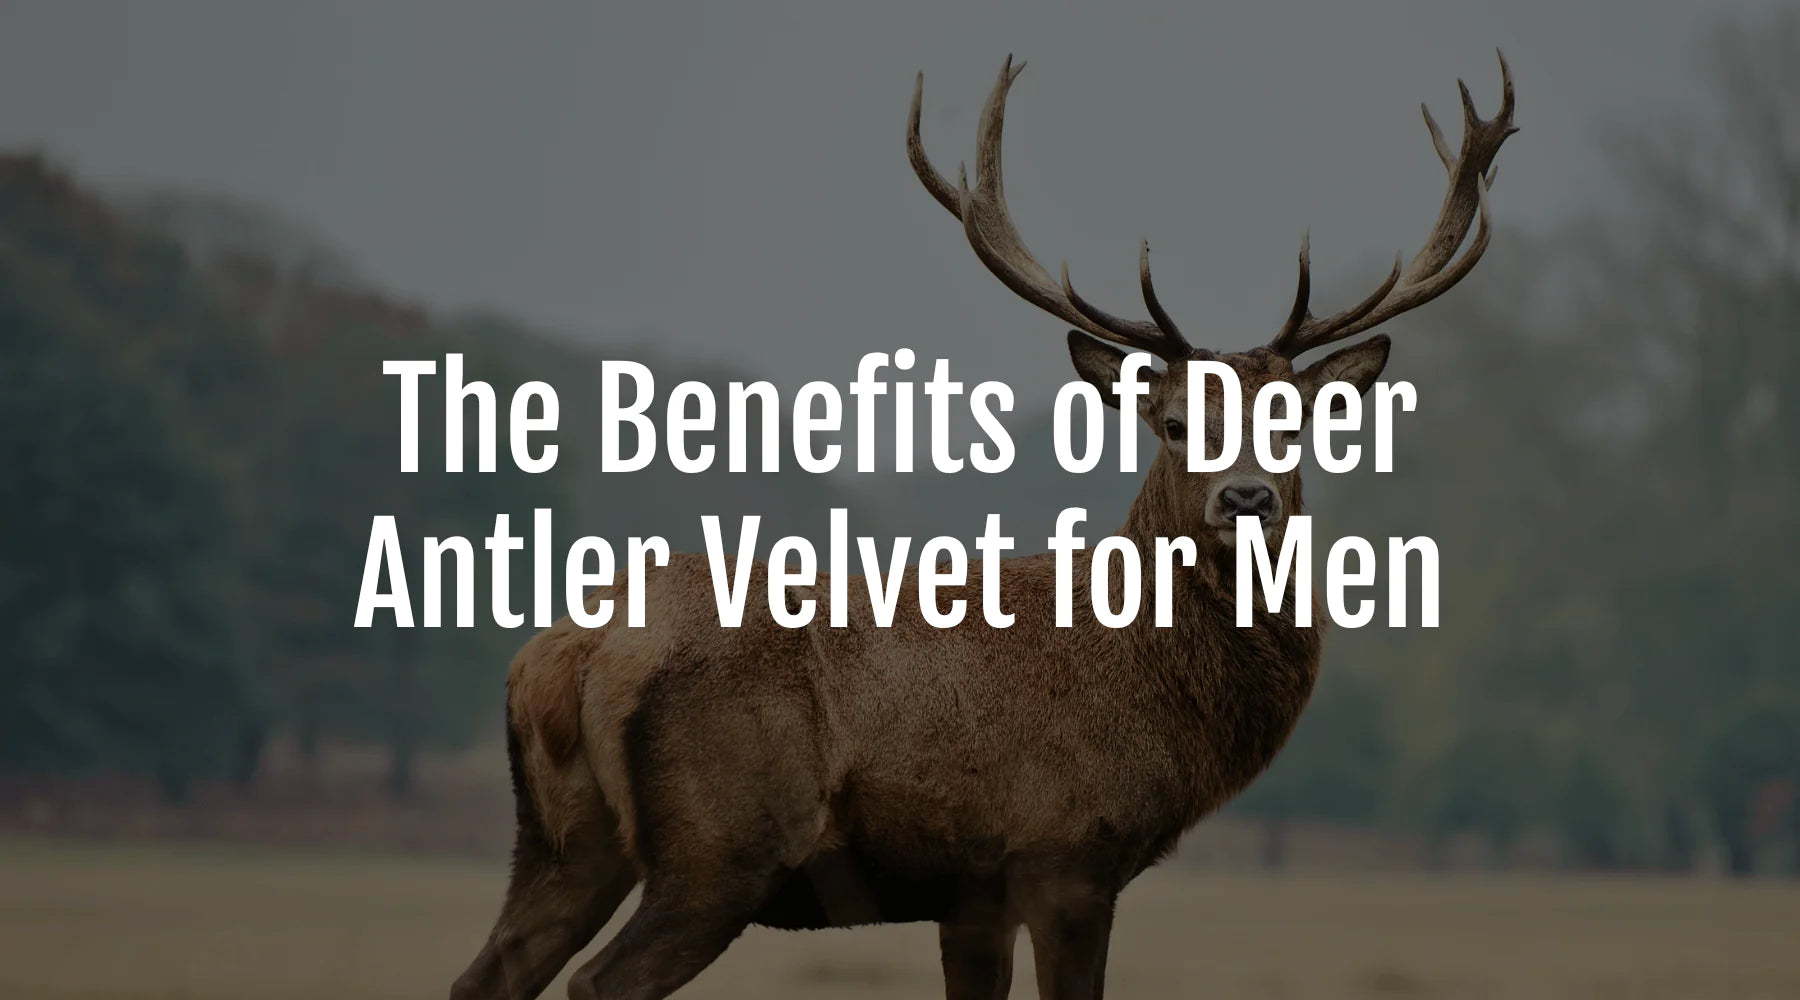 The Amazing Health Benefits Of Deer Antler Velvet For Men